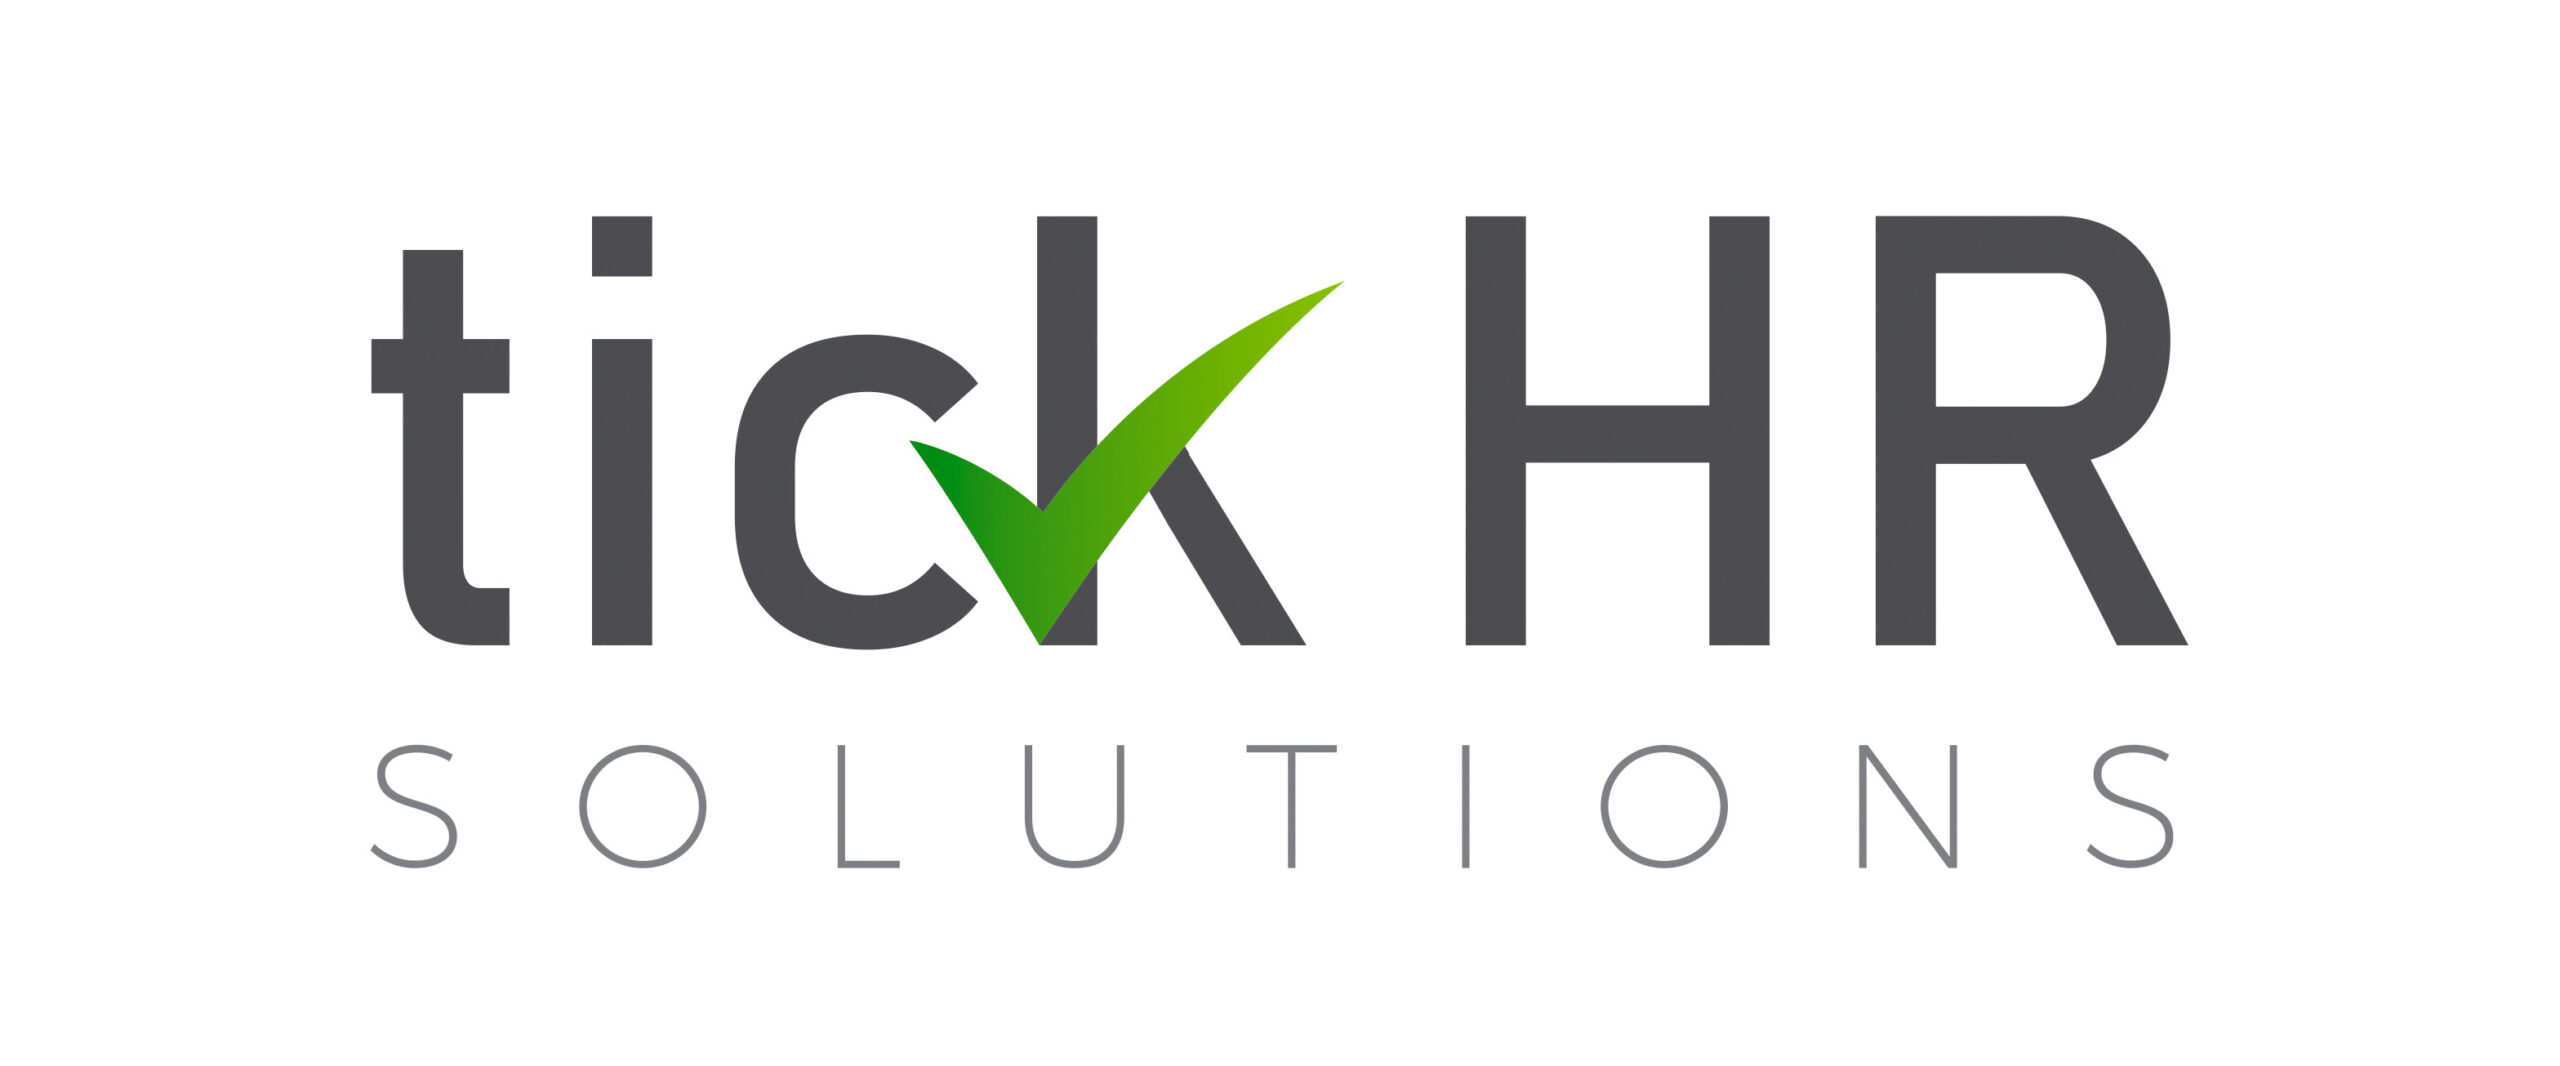 Tick HR Solutions